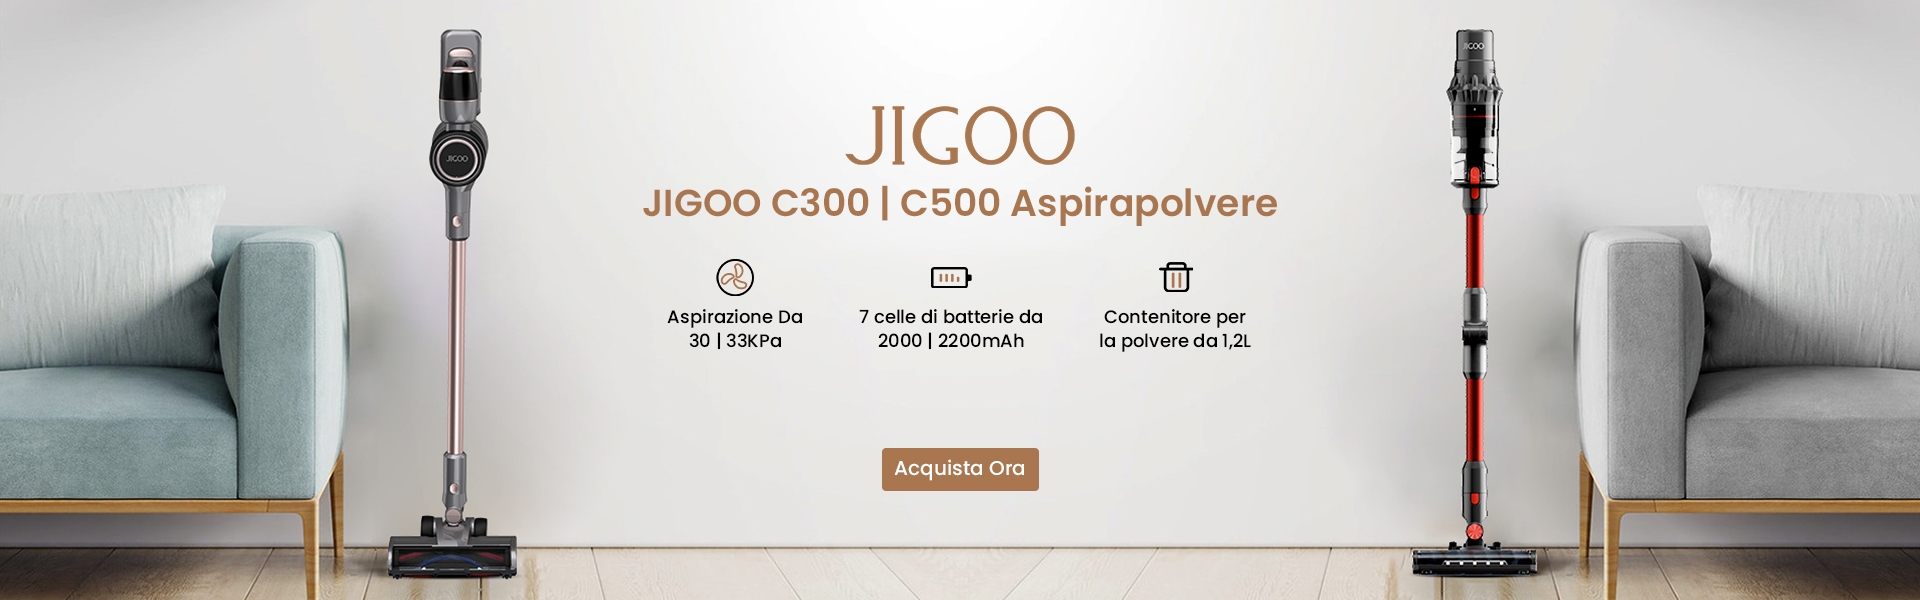 JIGOO C300 | C500